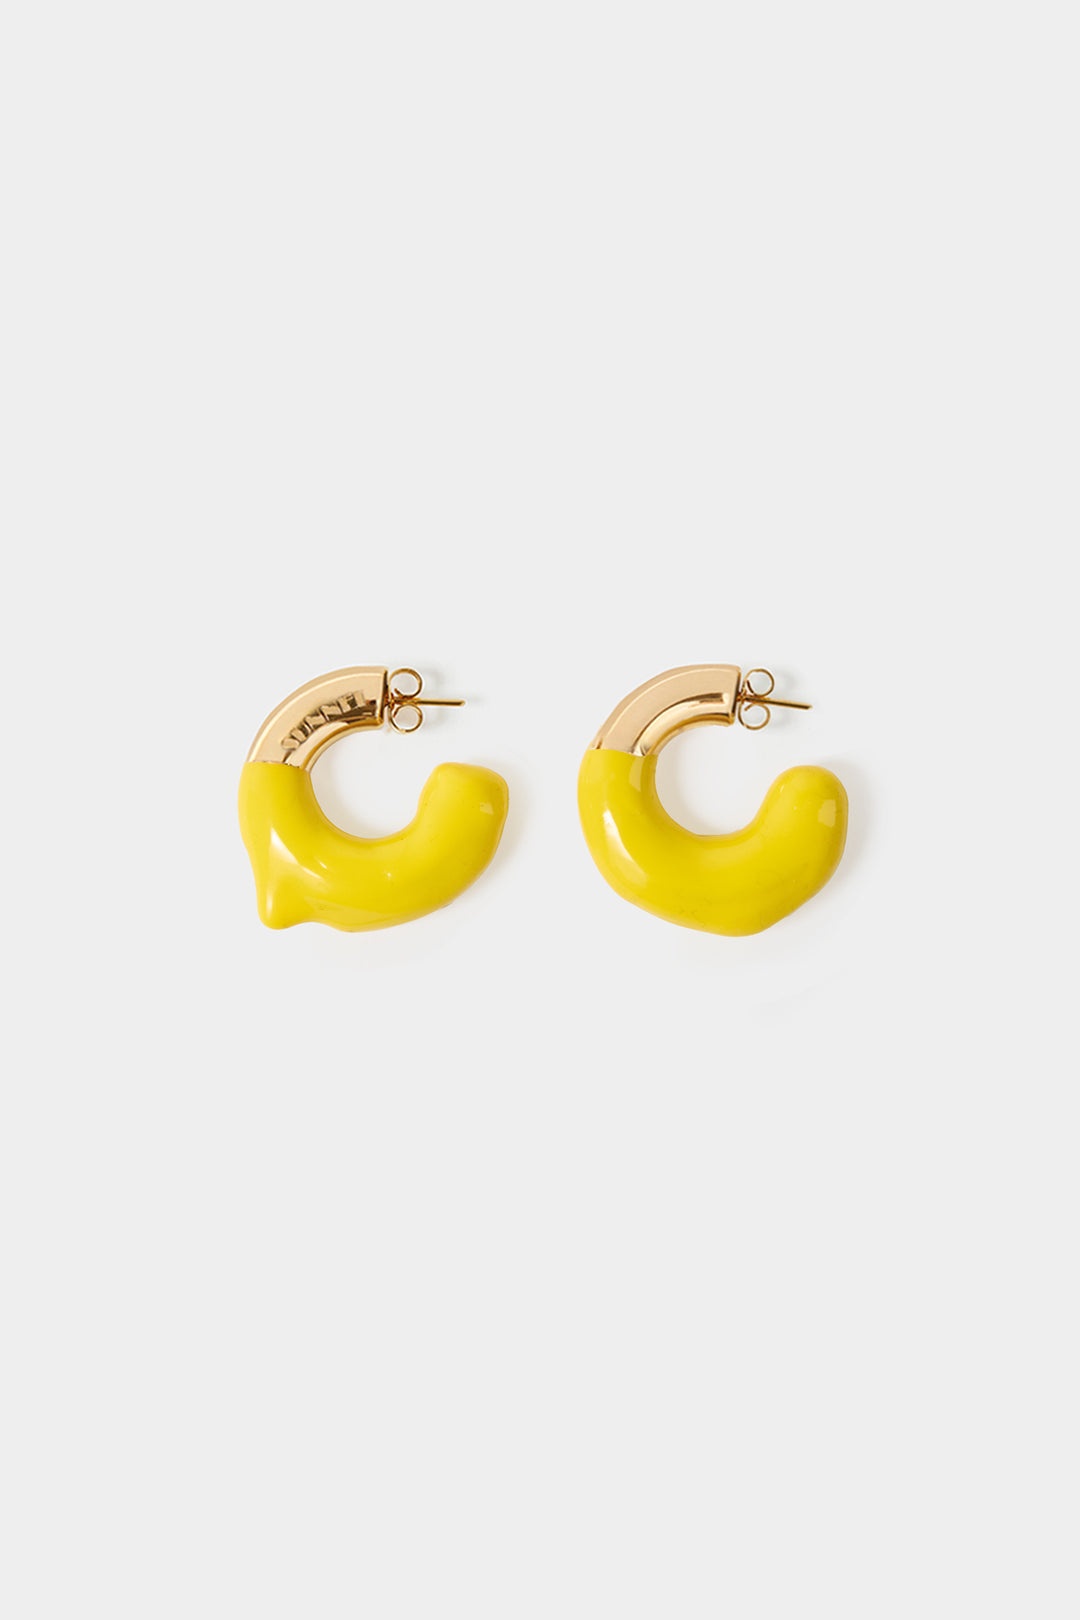 SMALL RUBBERIZED EARRINGS GOLD / yellow - 1